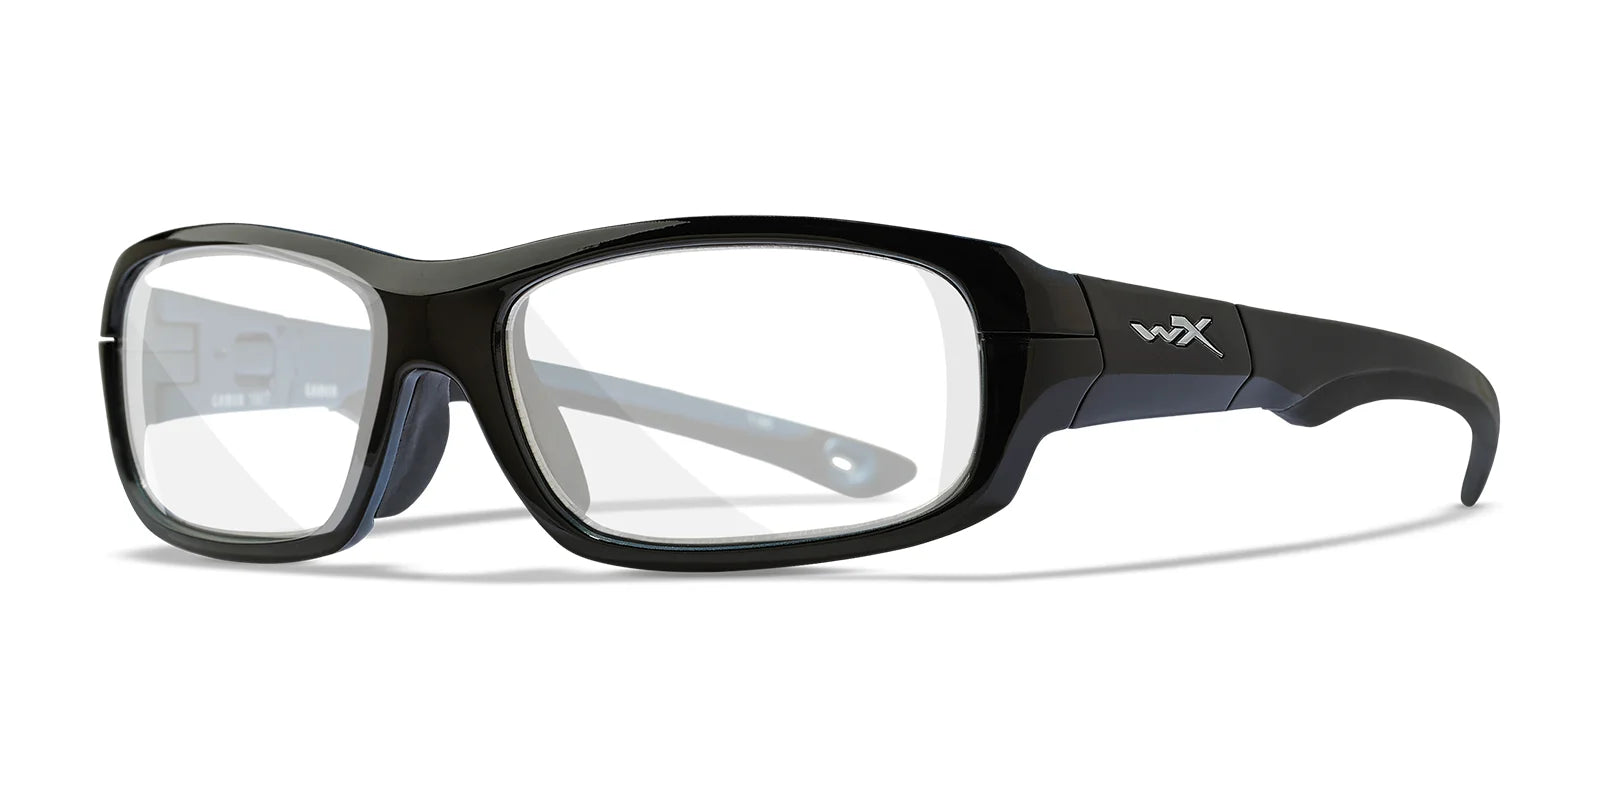 Wiley X GAMER Eyeglasses Gloss Black and Metallic Blue / Clear